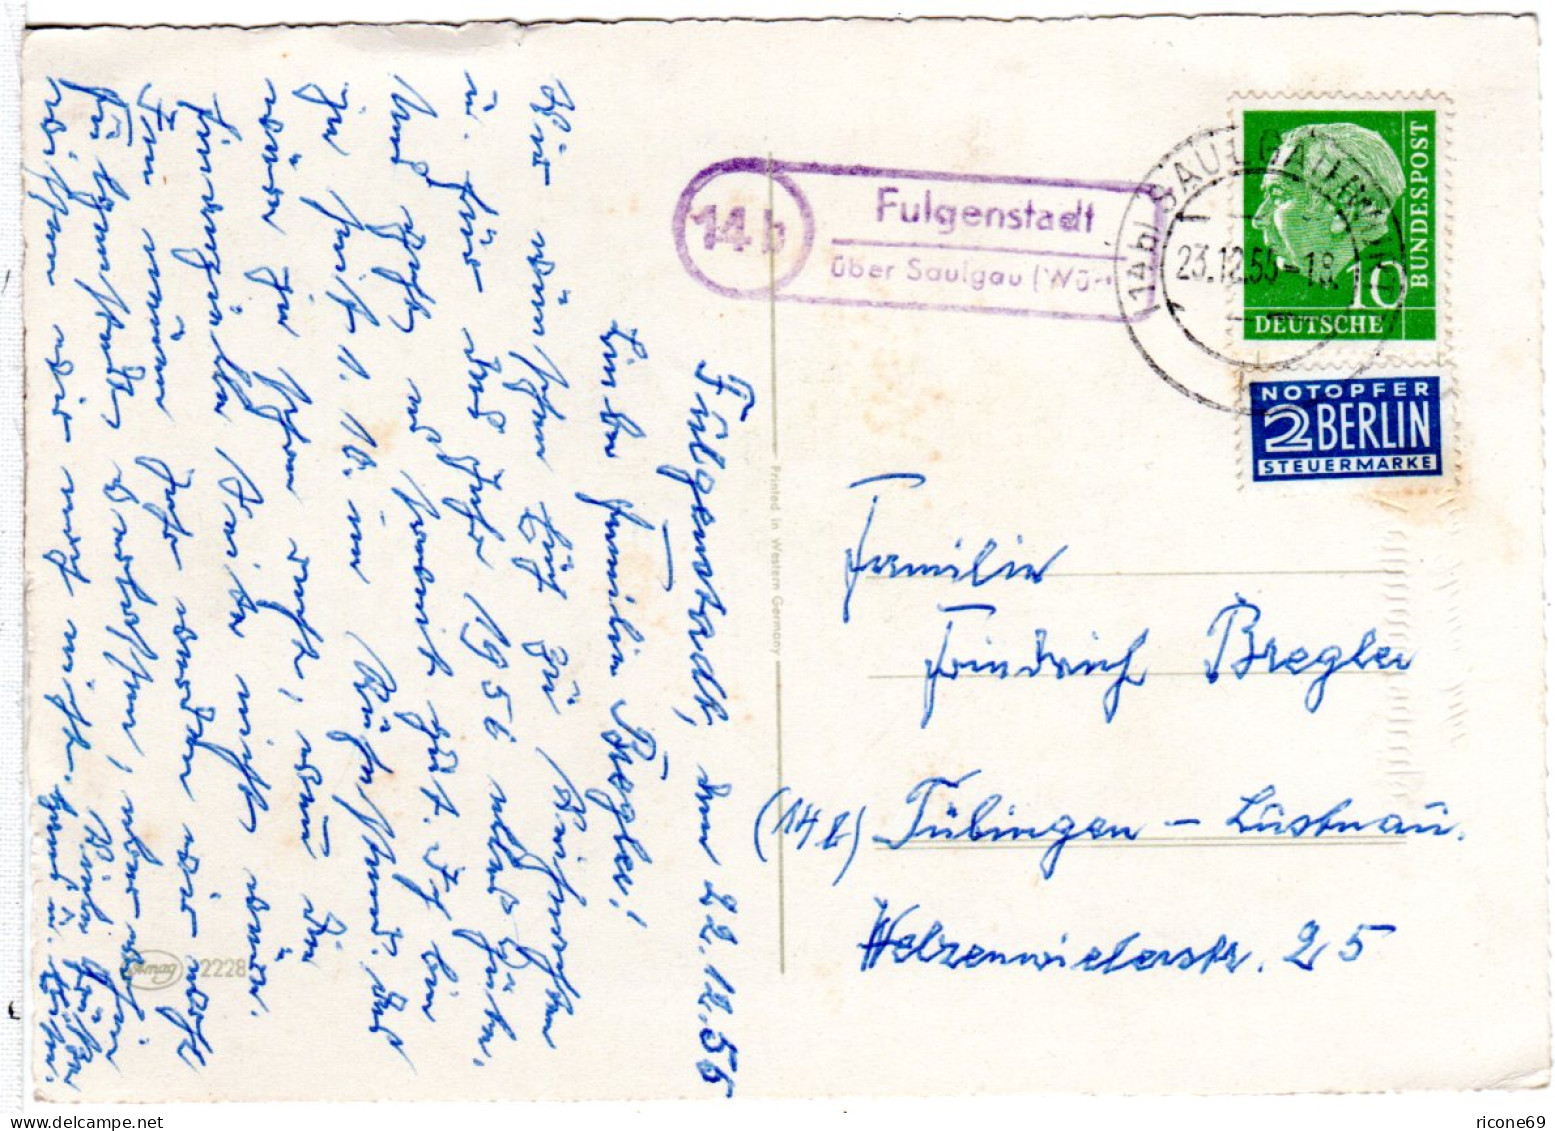 BRD 1955, Landpost Stempel 14b FULGENSTADT über Saulgau Auf Karte M. 10 Pf.  - Verzamelingen